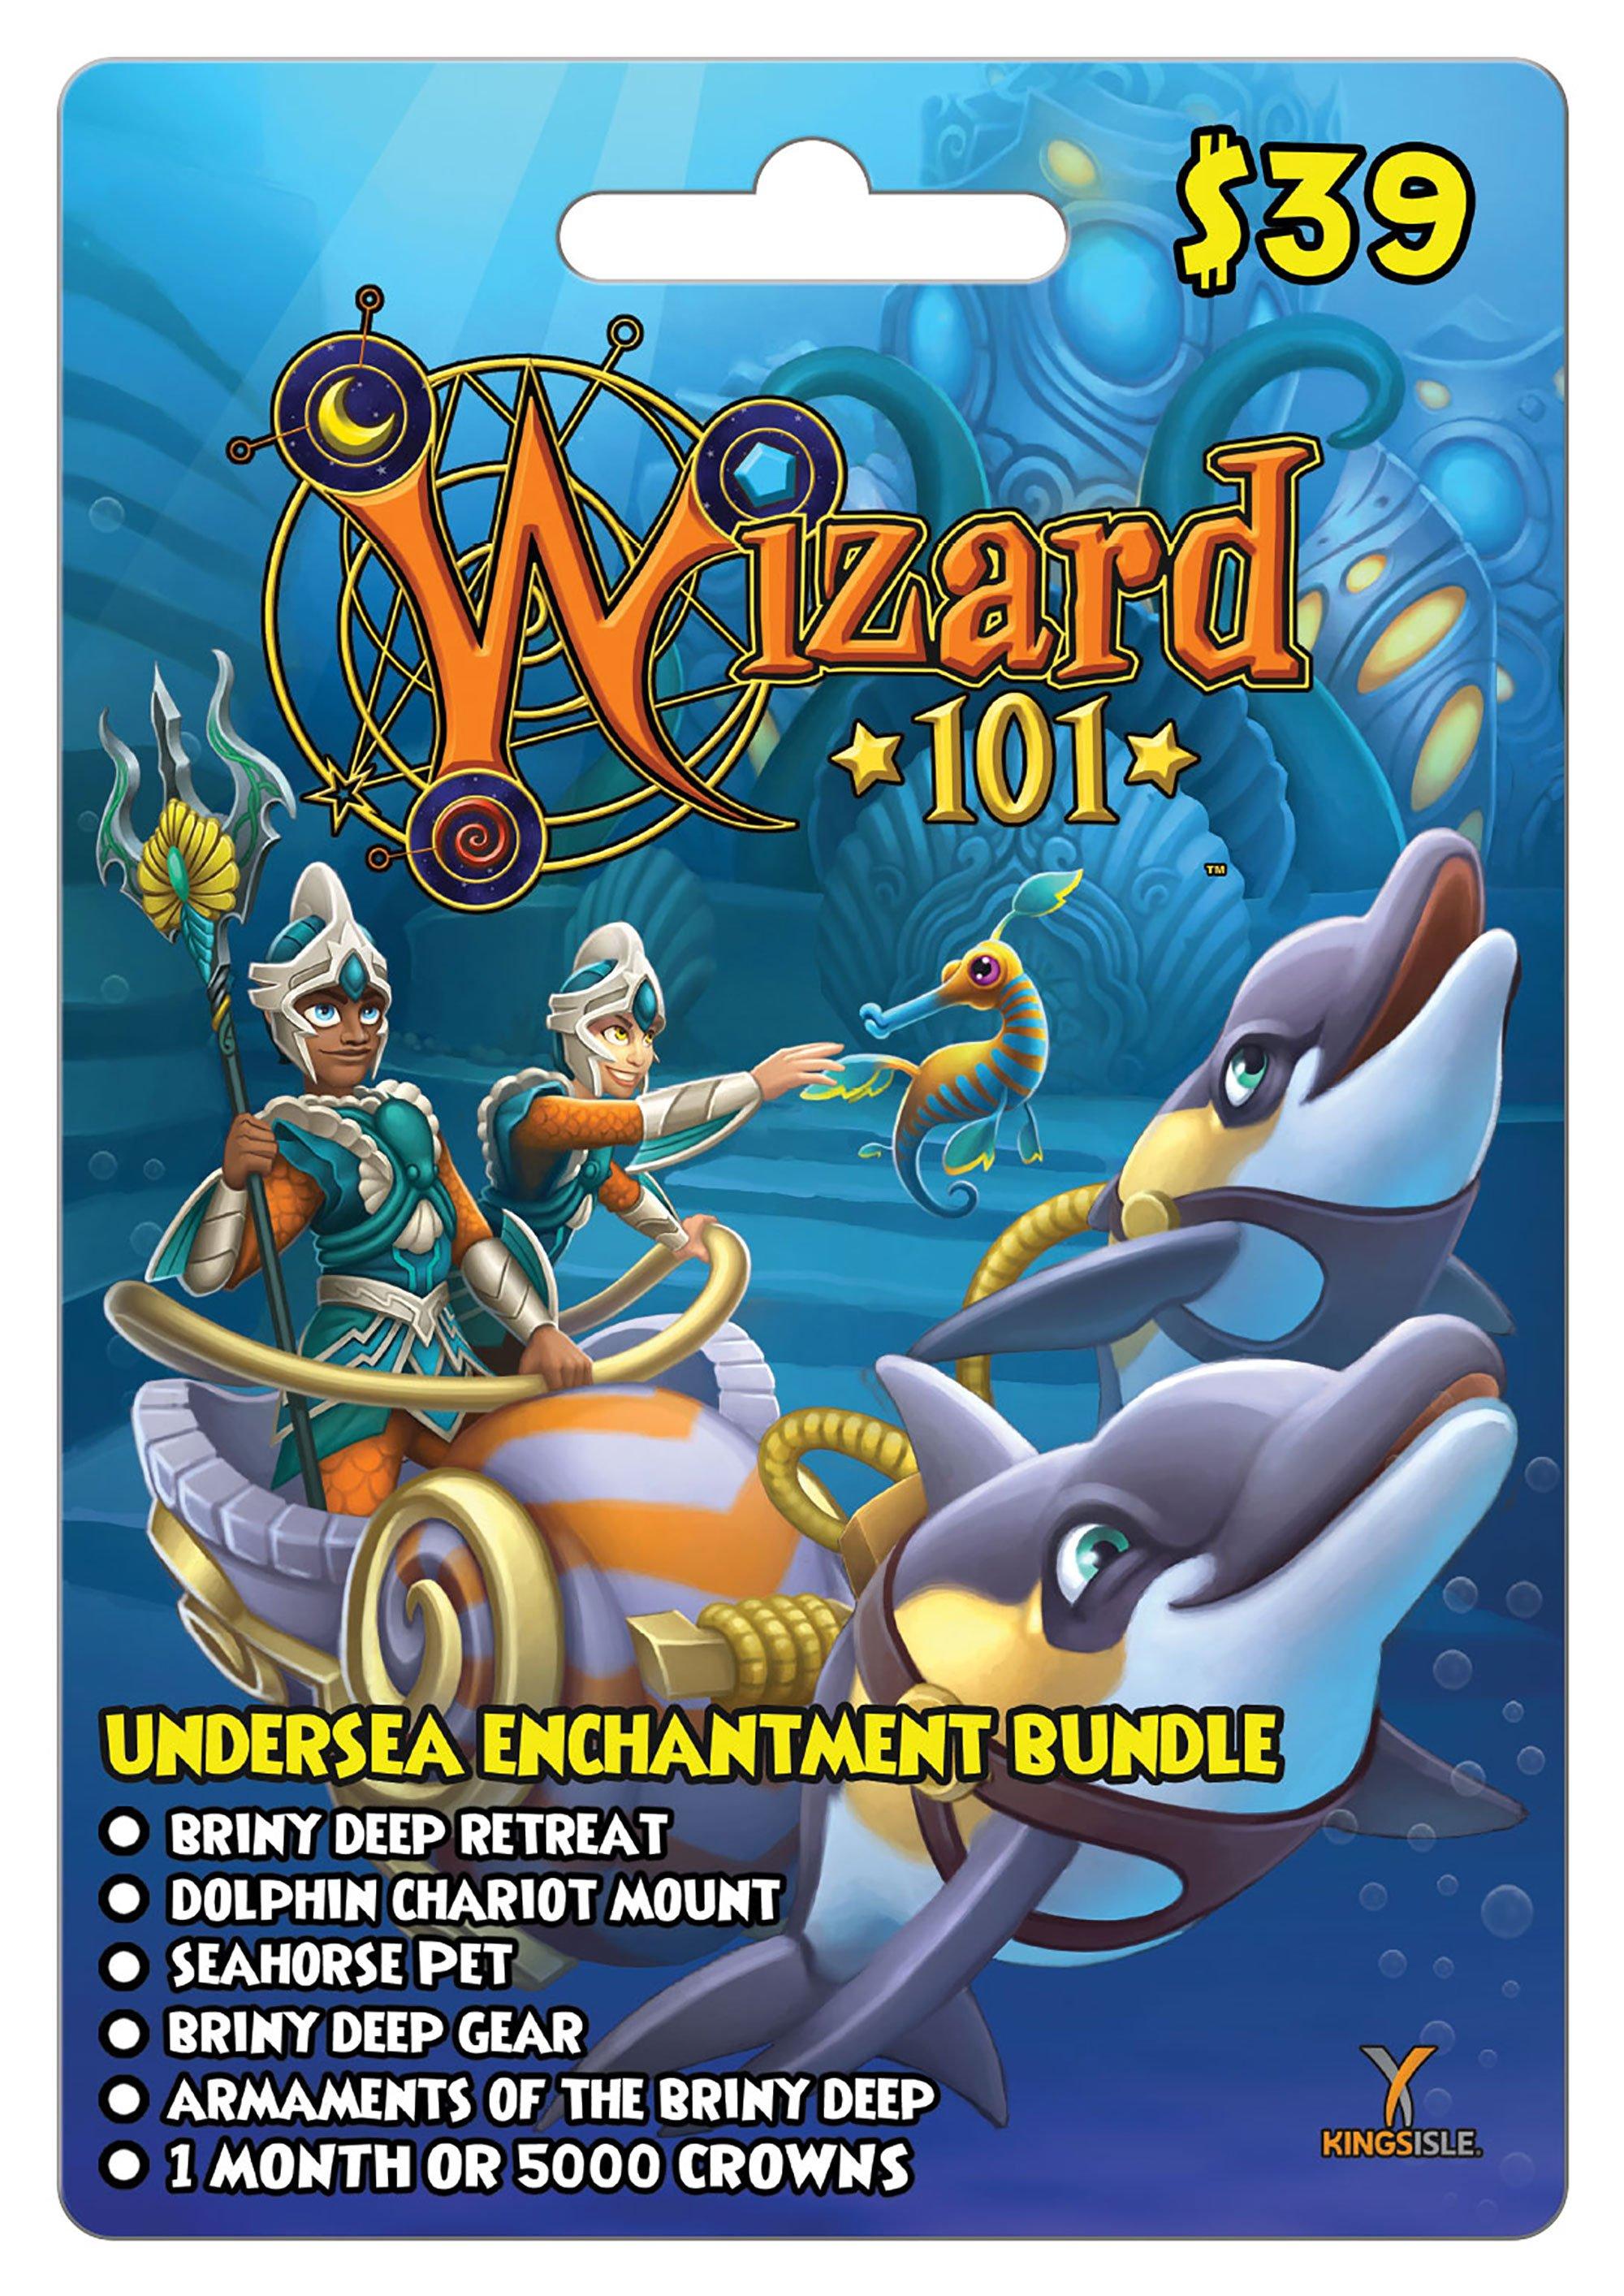 https://media.gamestop.com/i/gamestop/11097593/Wizard-101-Undersea-Enchantment-Digital-Card